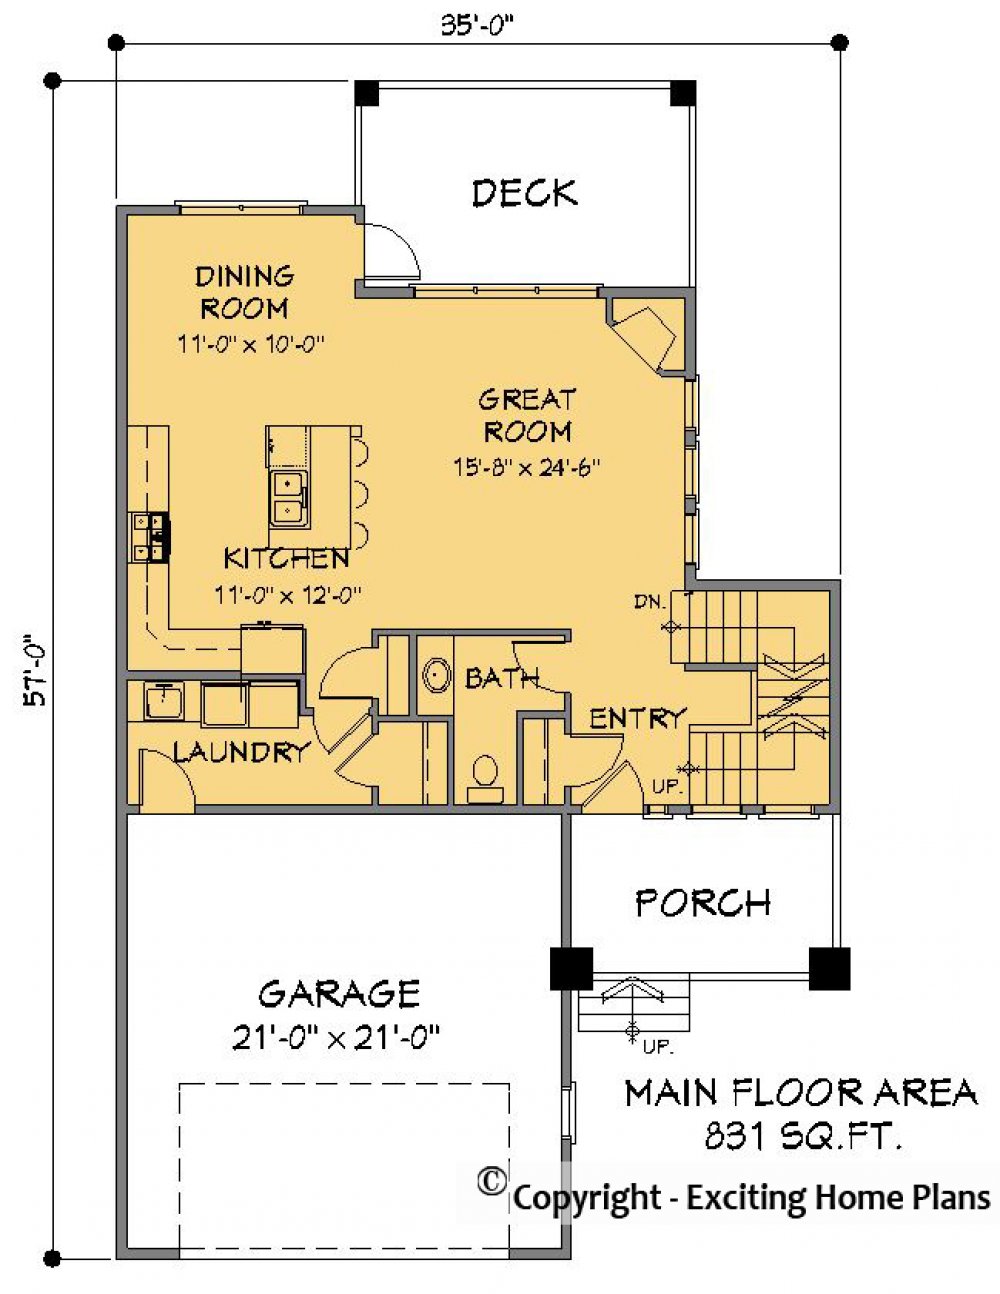 House Plan E1495-10 Main Floor Plan